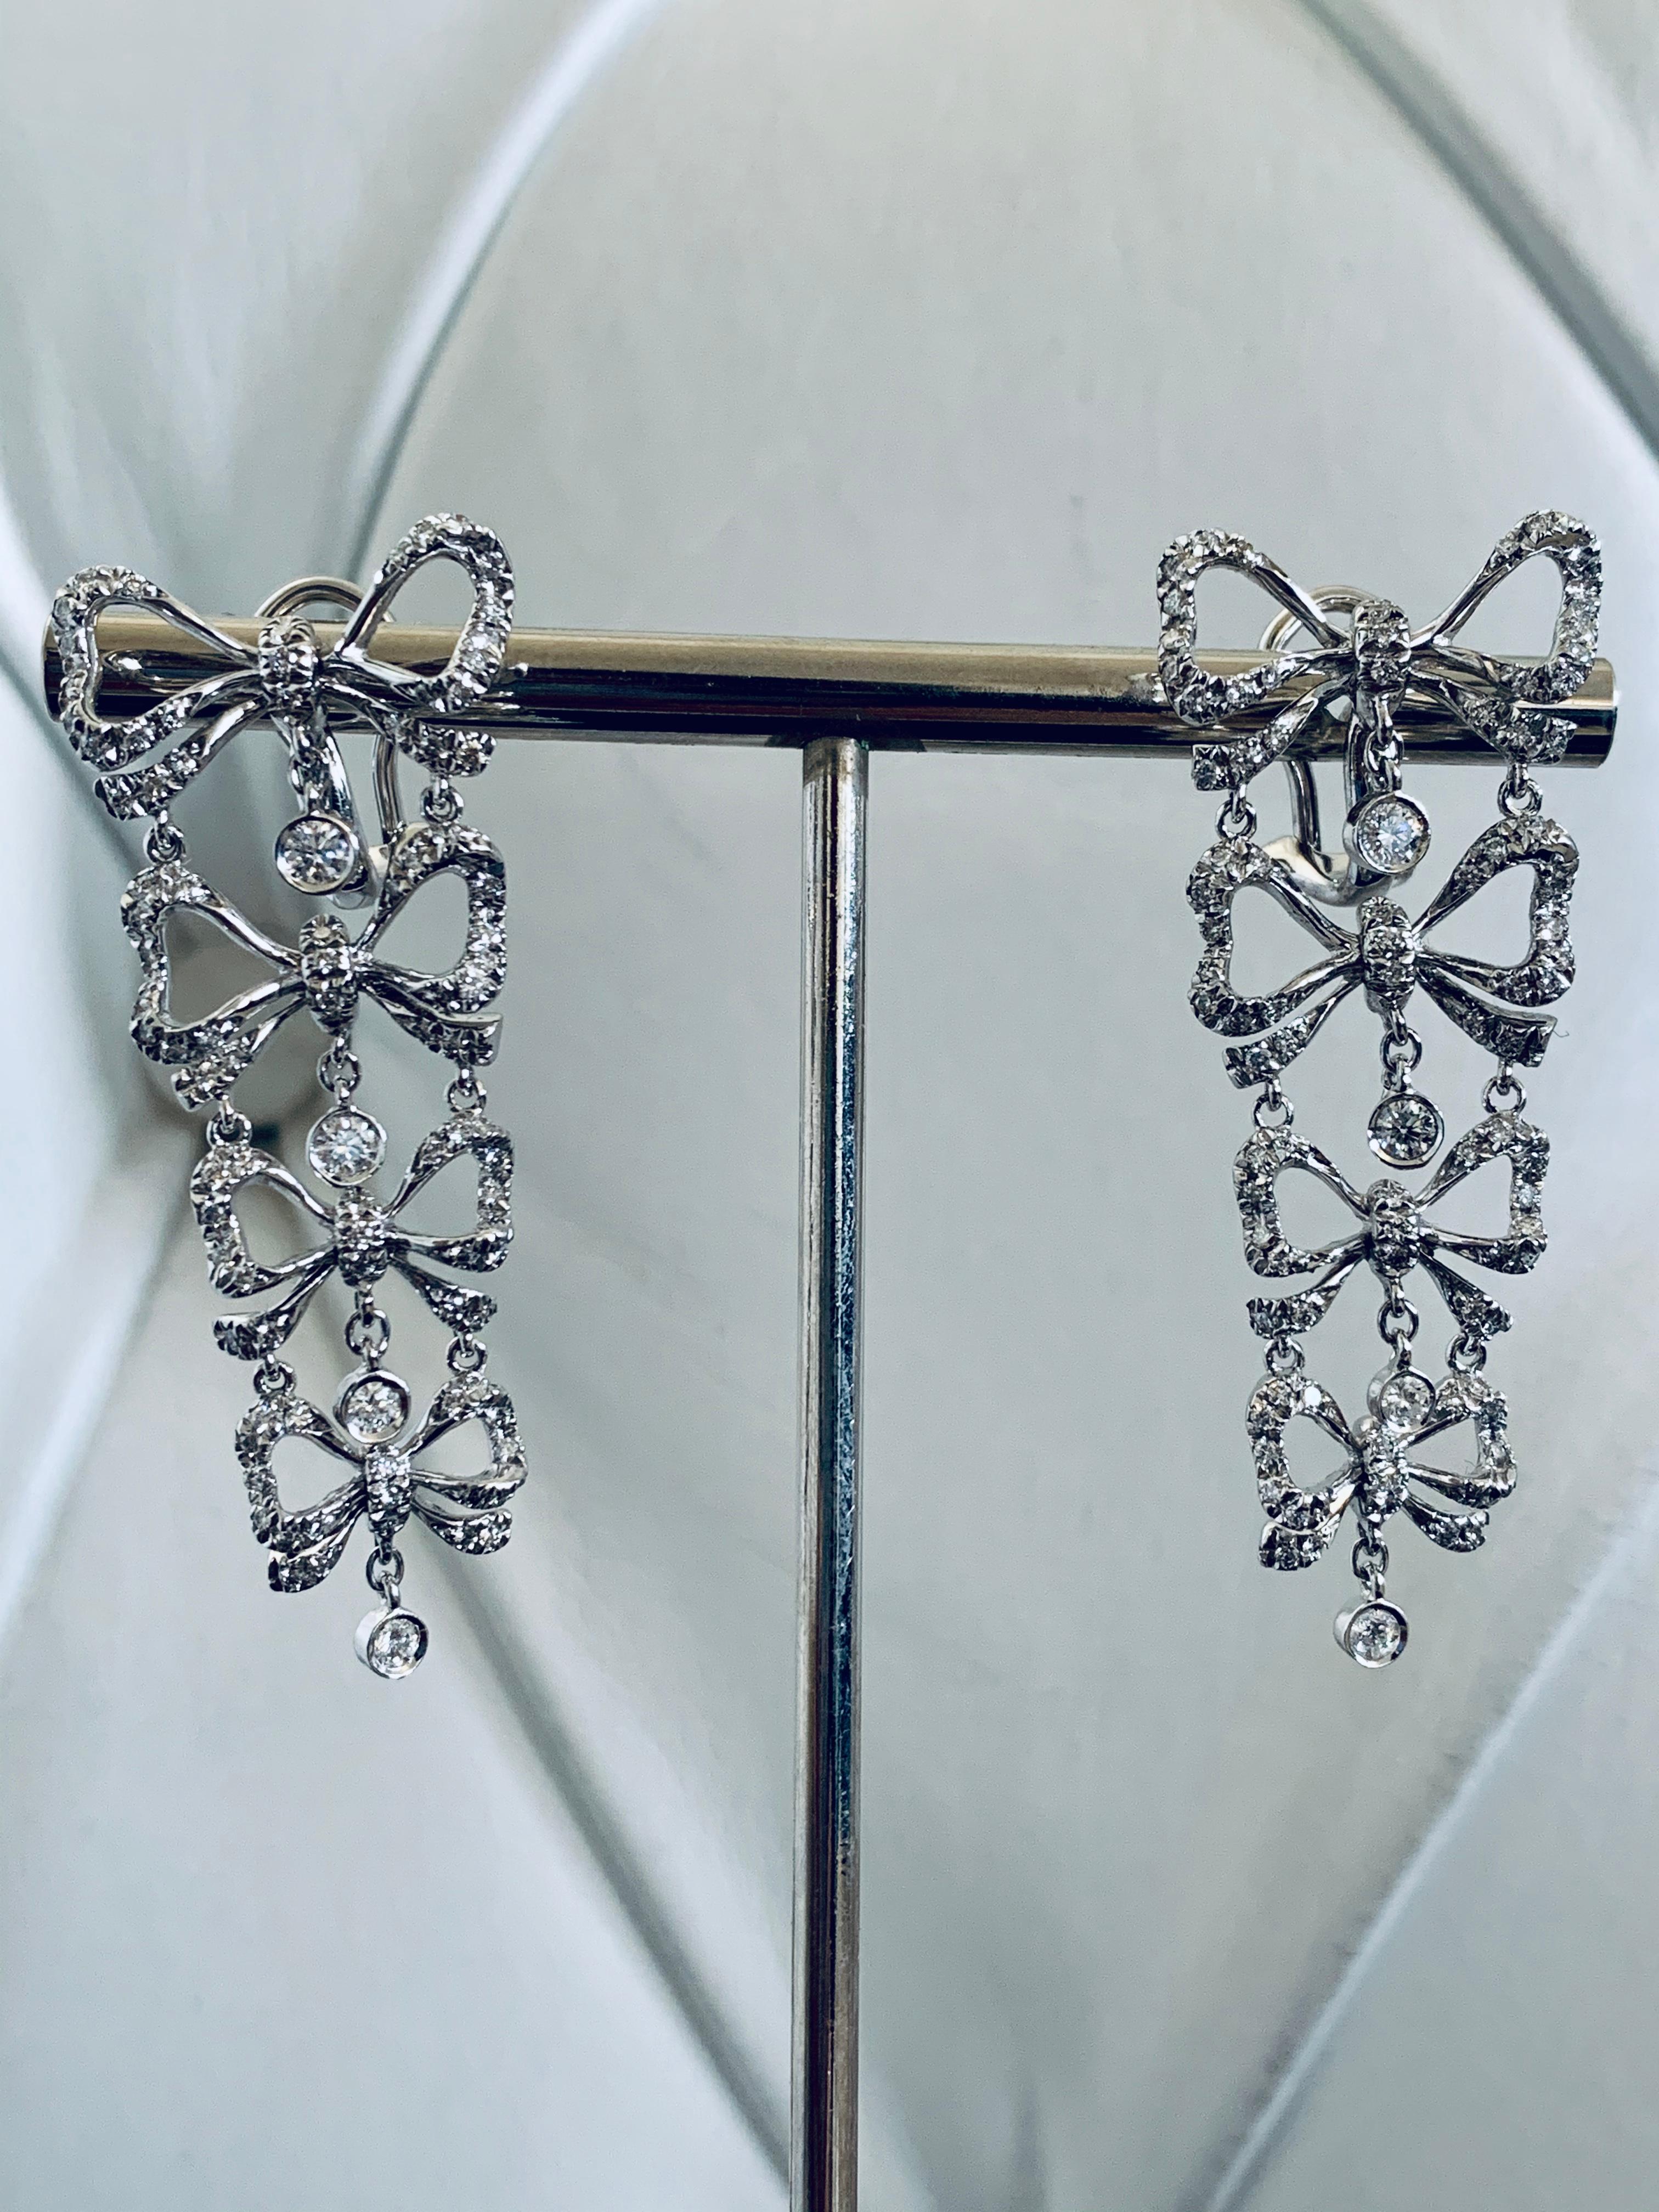 Brilliant Cut 1.52 Carat Diamond set in 18Kt White Gold Stefan Hafner Dangling Earrings